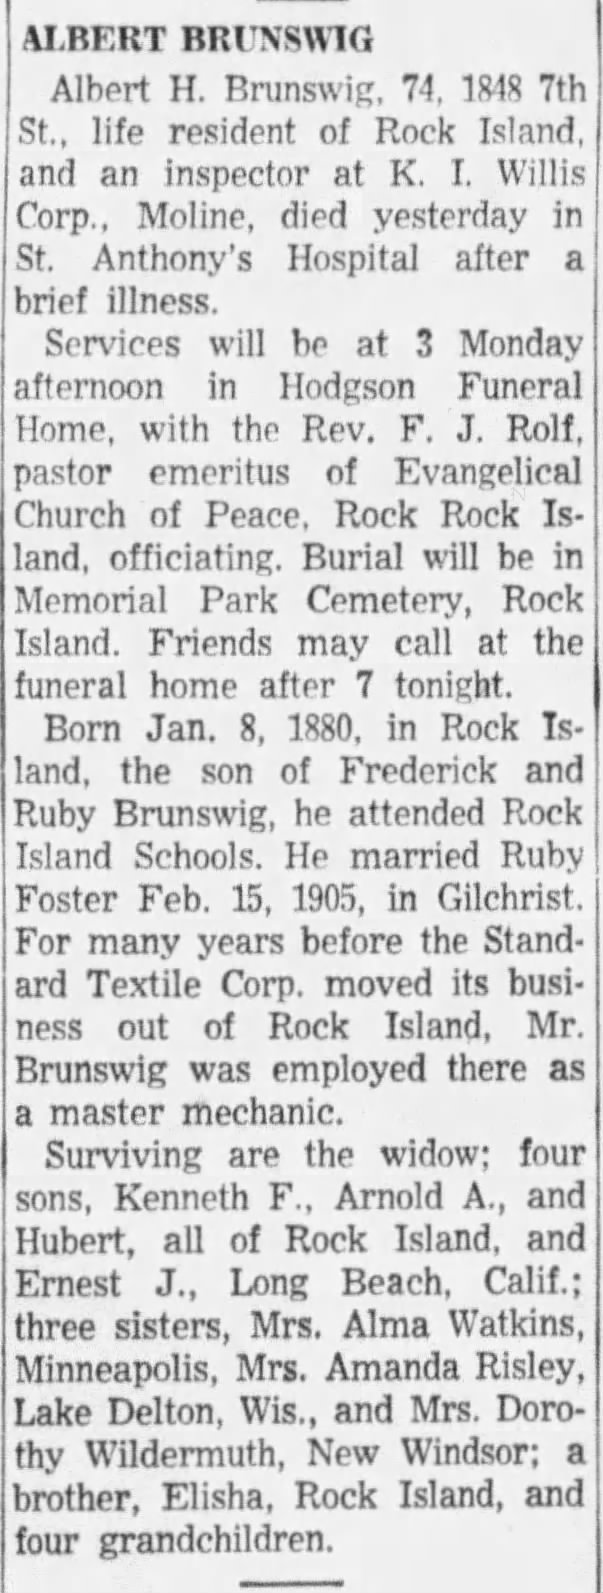 Albert Brunswig Obituary, The Dispatch, Moline, Illinois, 19 Mar 1954, p. 16